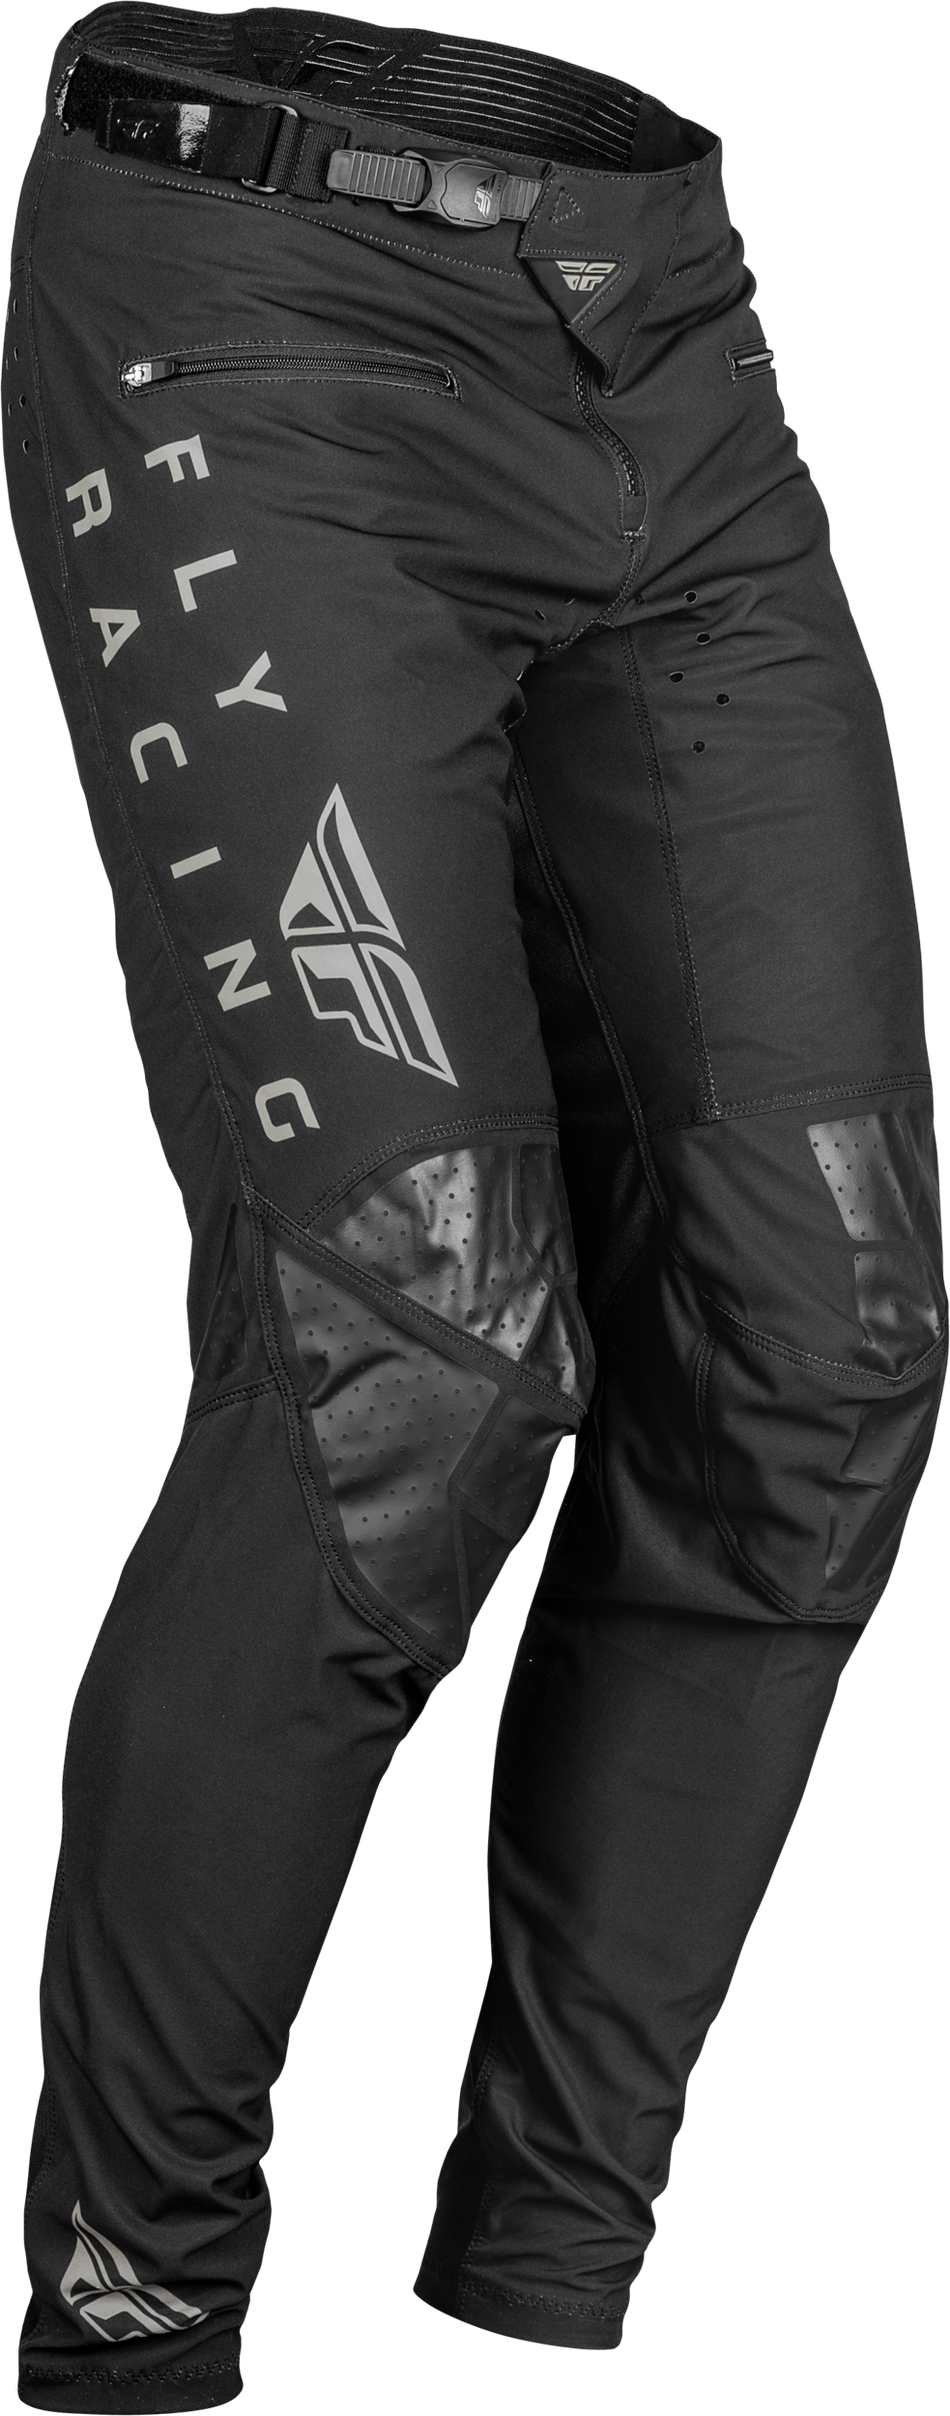 FLY RACING Radium Bicycle Pants Black/Grey Sz 36 376-04036